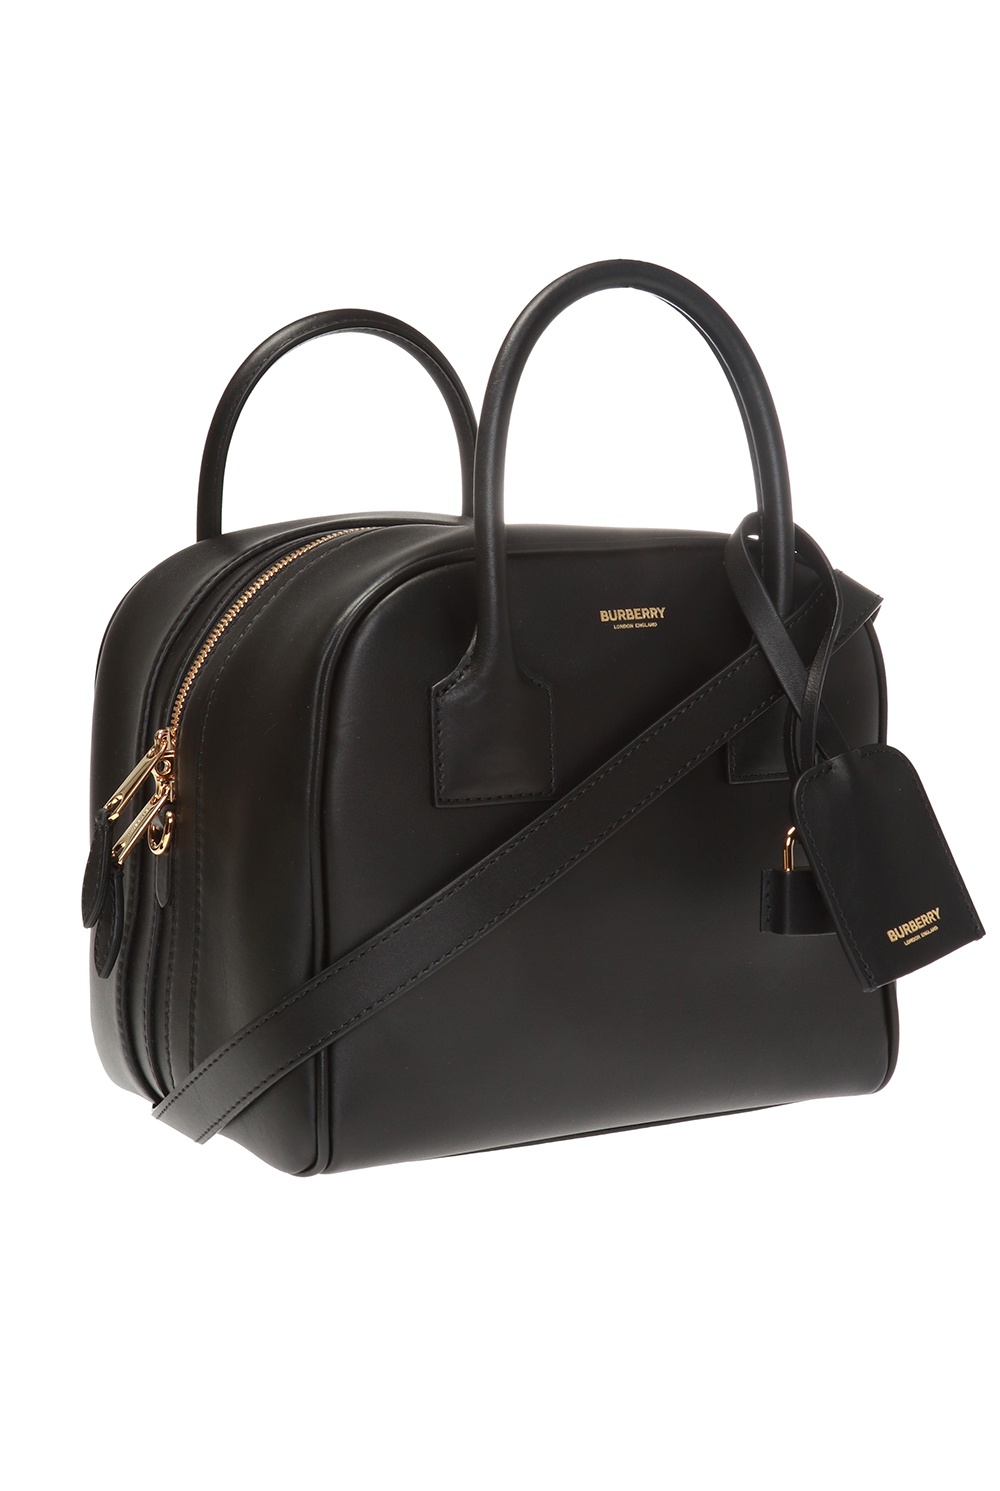 Burberry Leather Cube Bum Bag - Black Waist Bags, Handbags - BUR370726